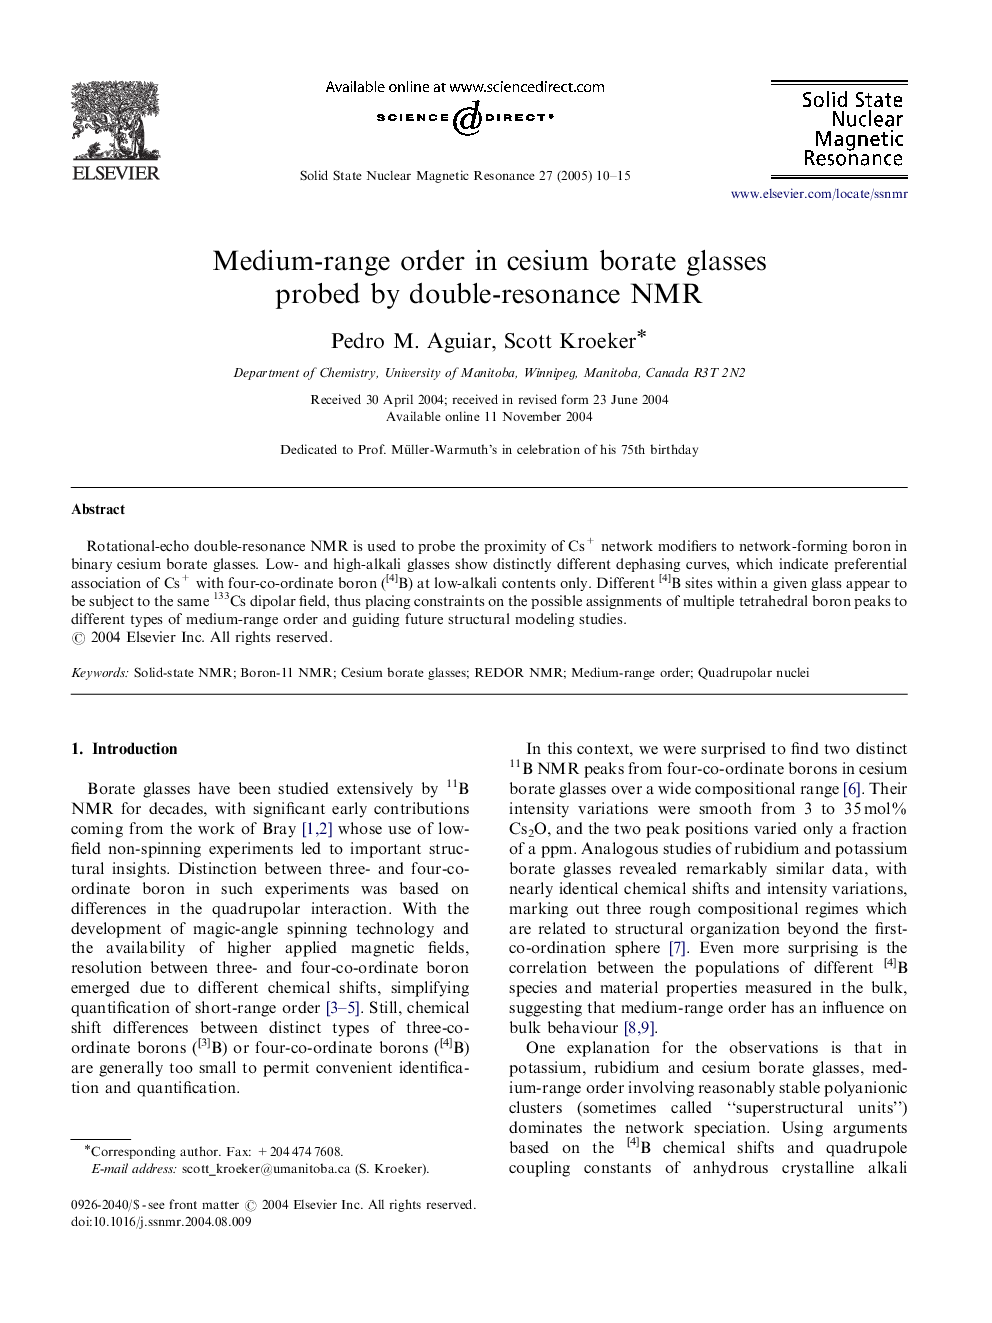 Medium-range order in cesium borate glasses probed by double-resonance NMR